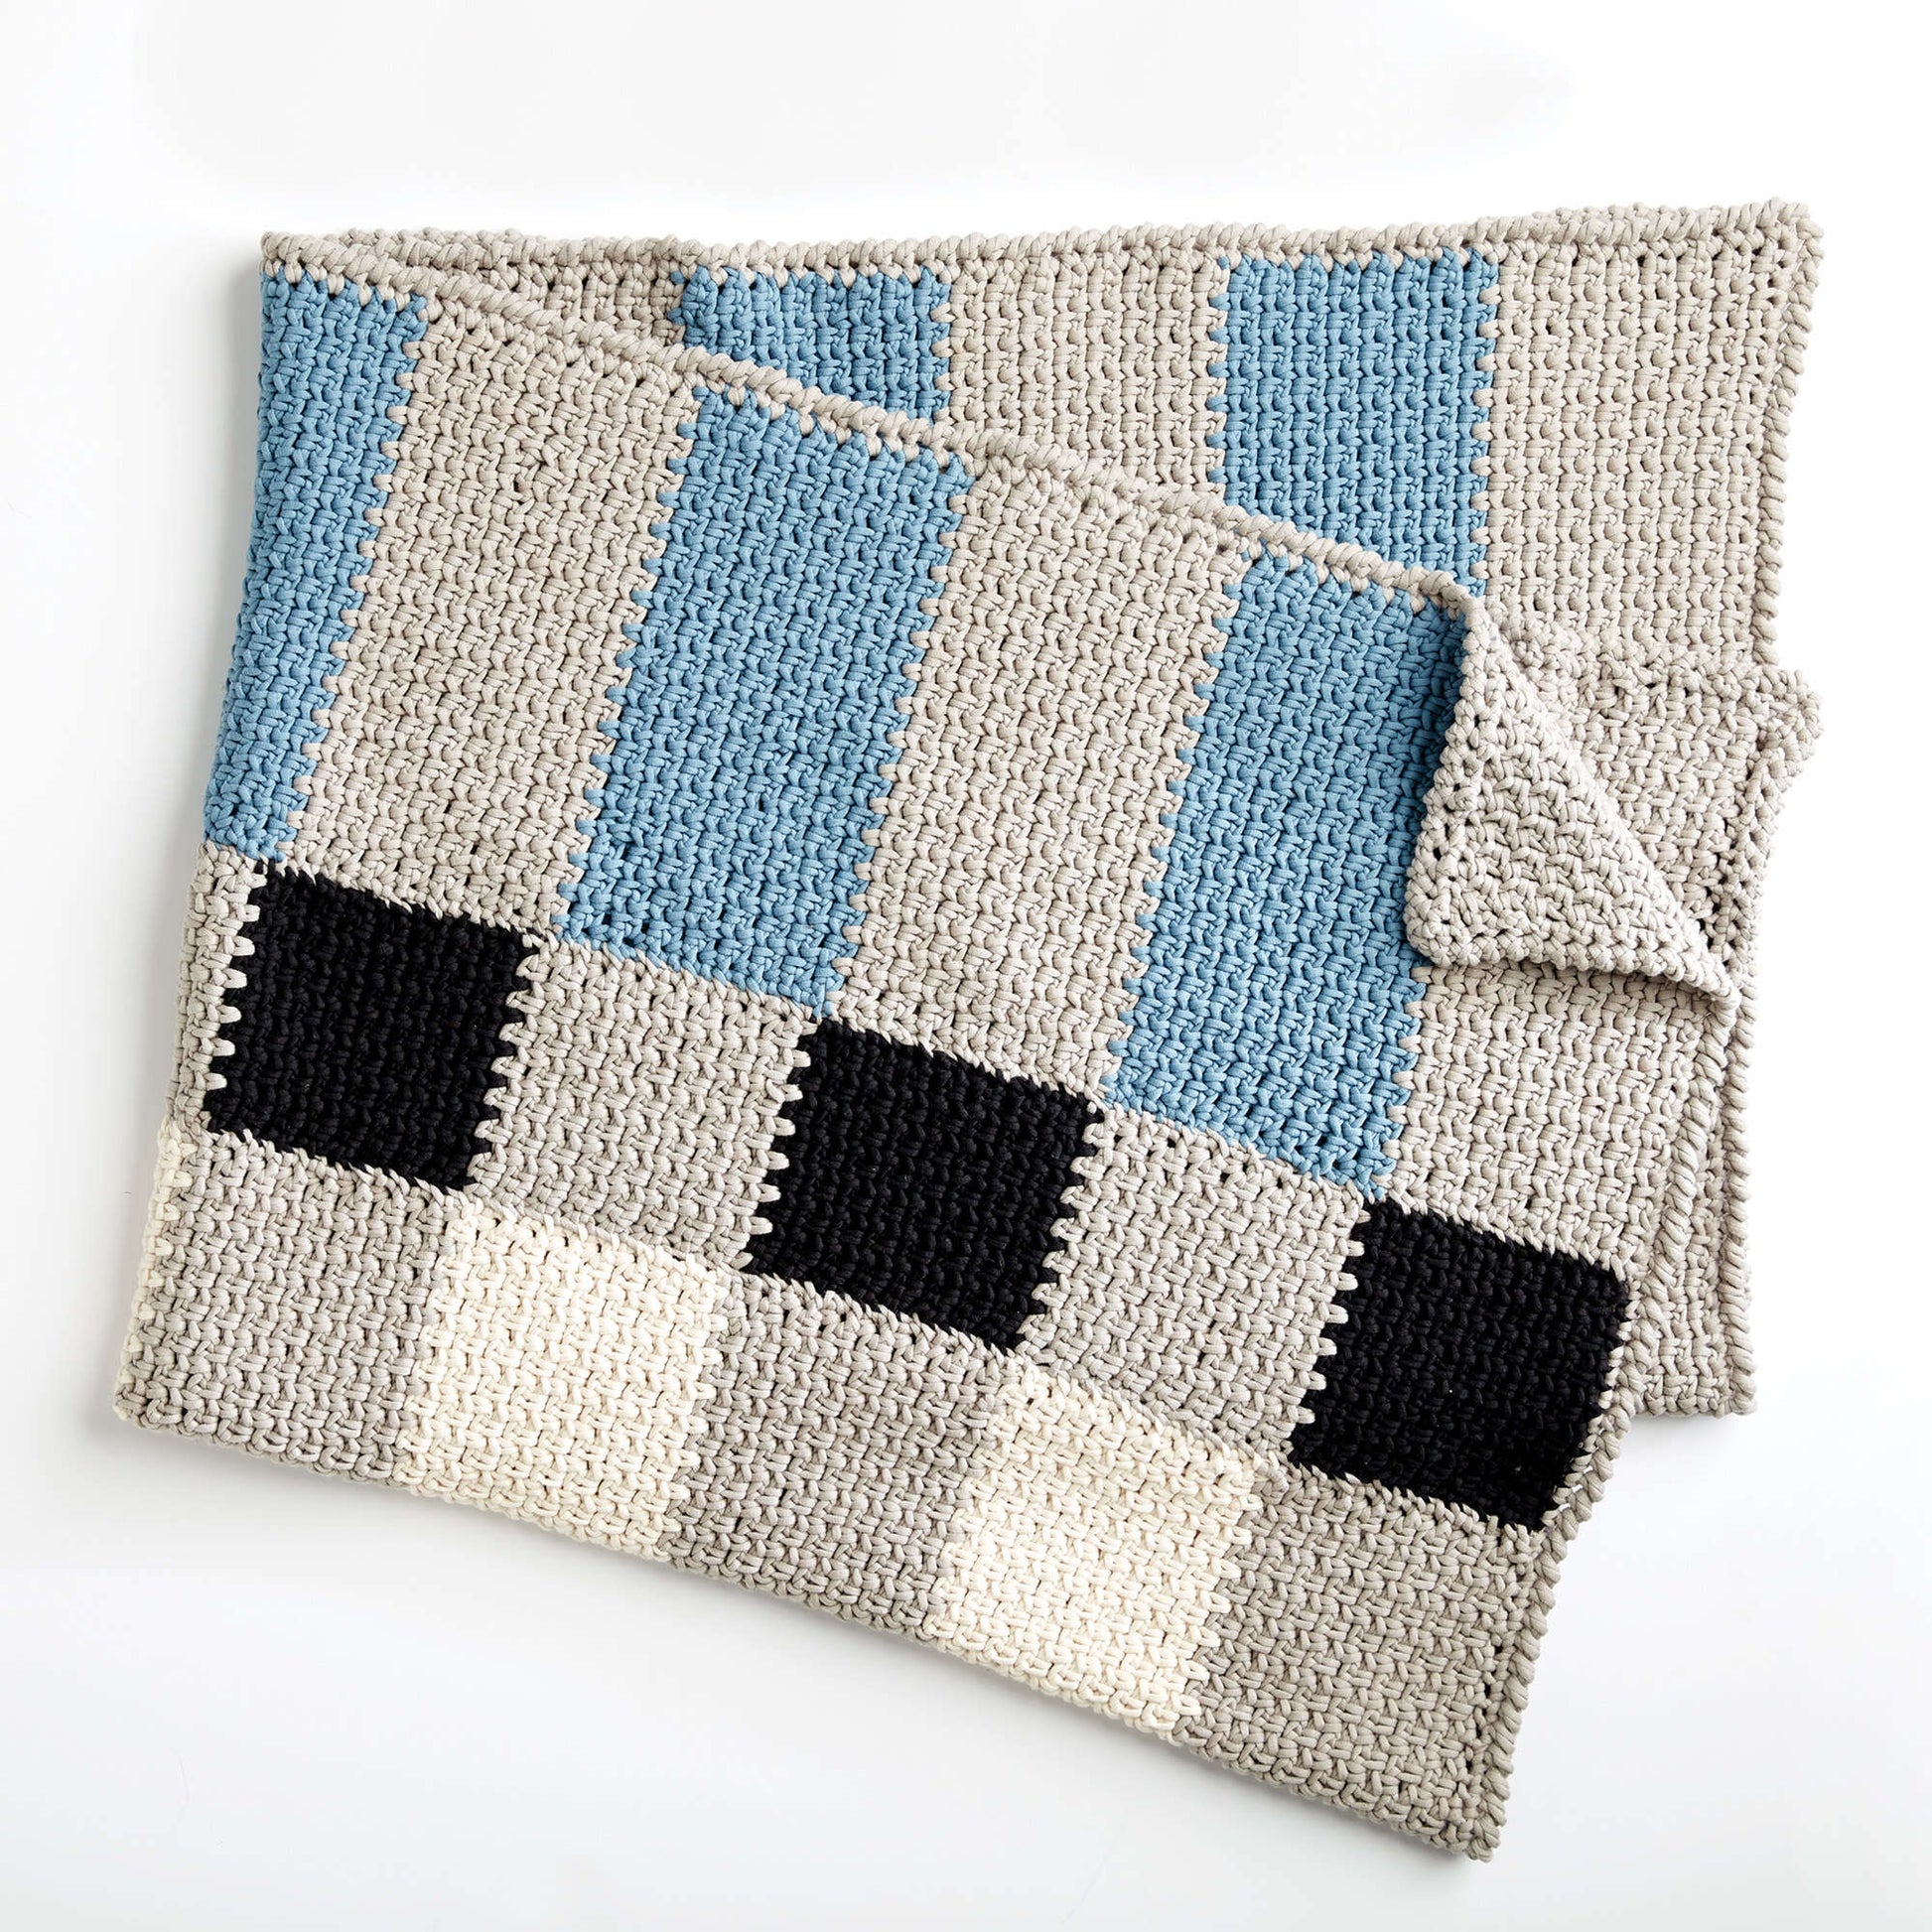 Bernat Big Plaid Crochet Blanket Crochet Blanket made in Bernat Maker Home Dec yarn